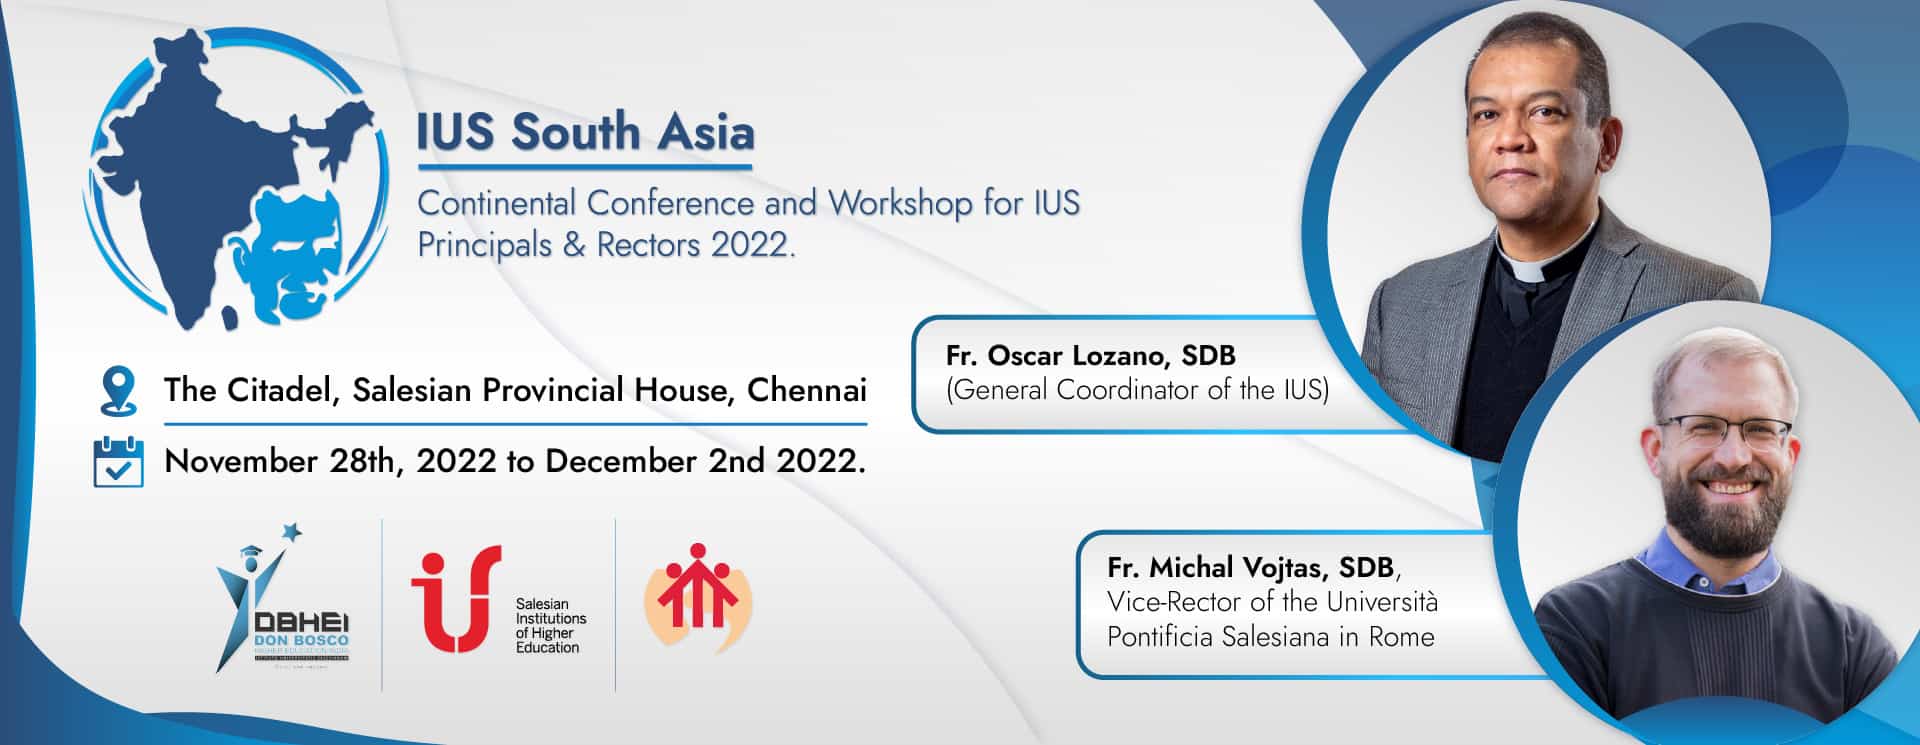 IUS South Asia Continental Conference & Workshop for IUS Rectors, Principals and Directors